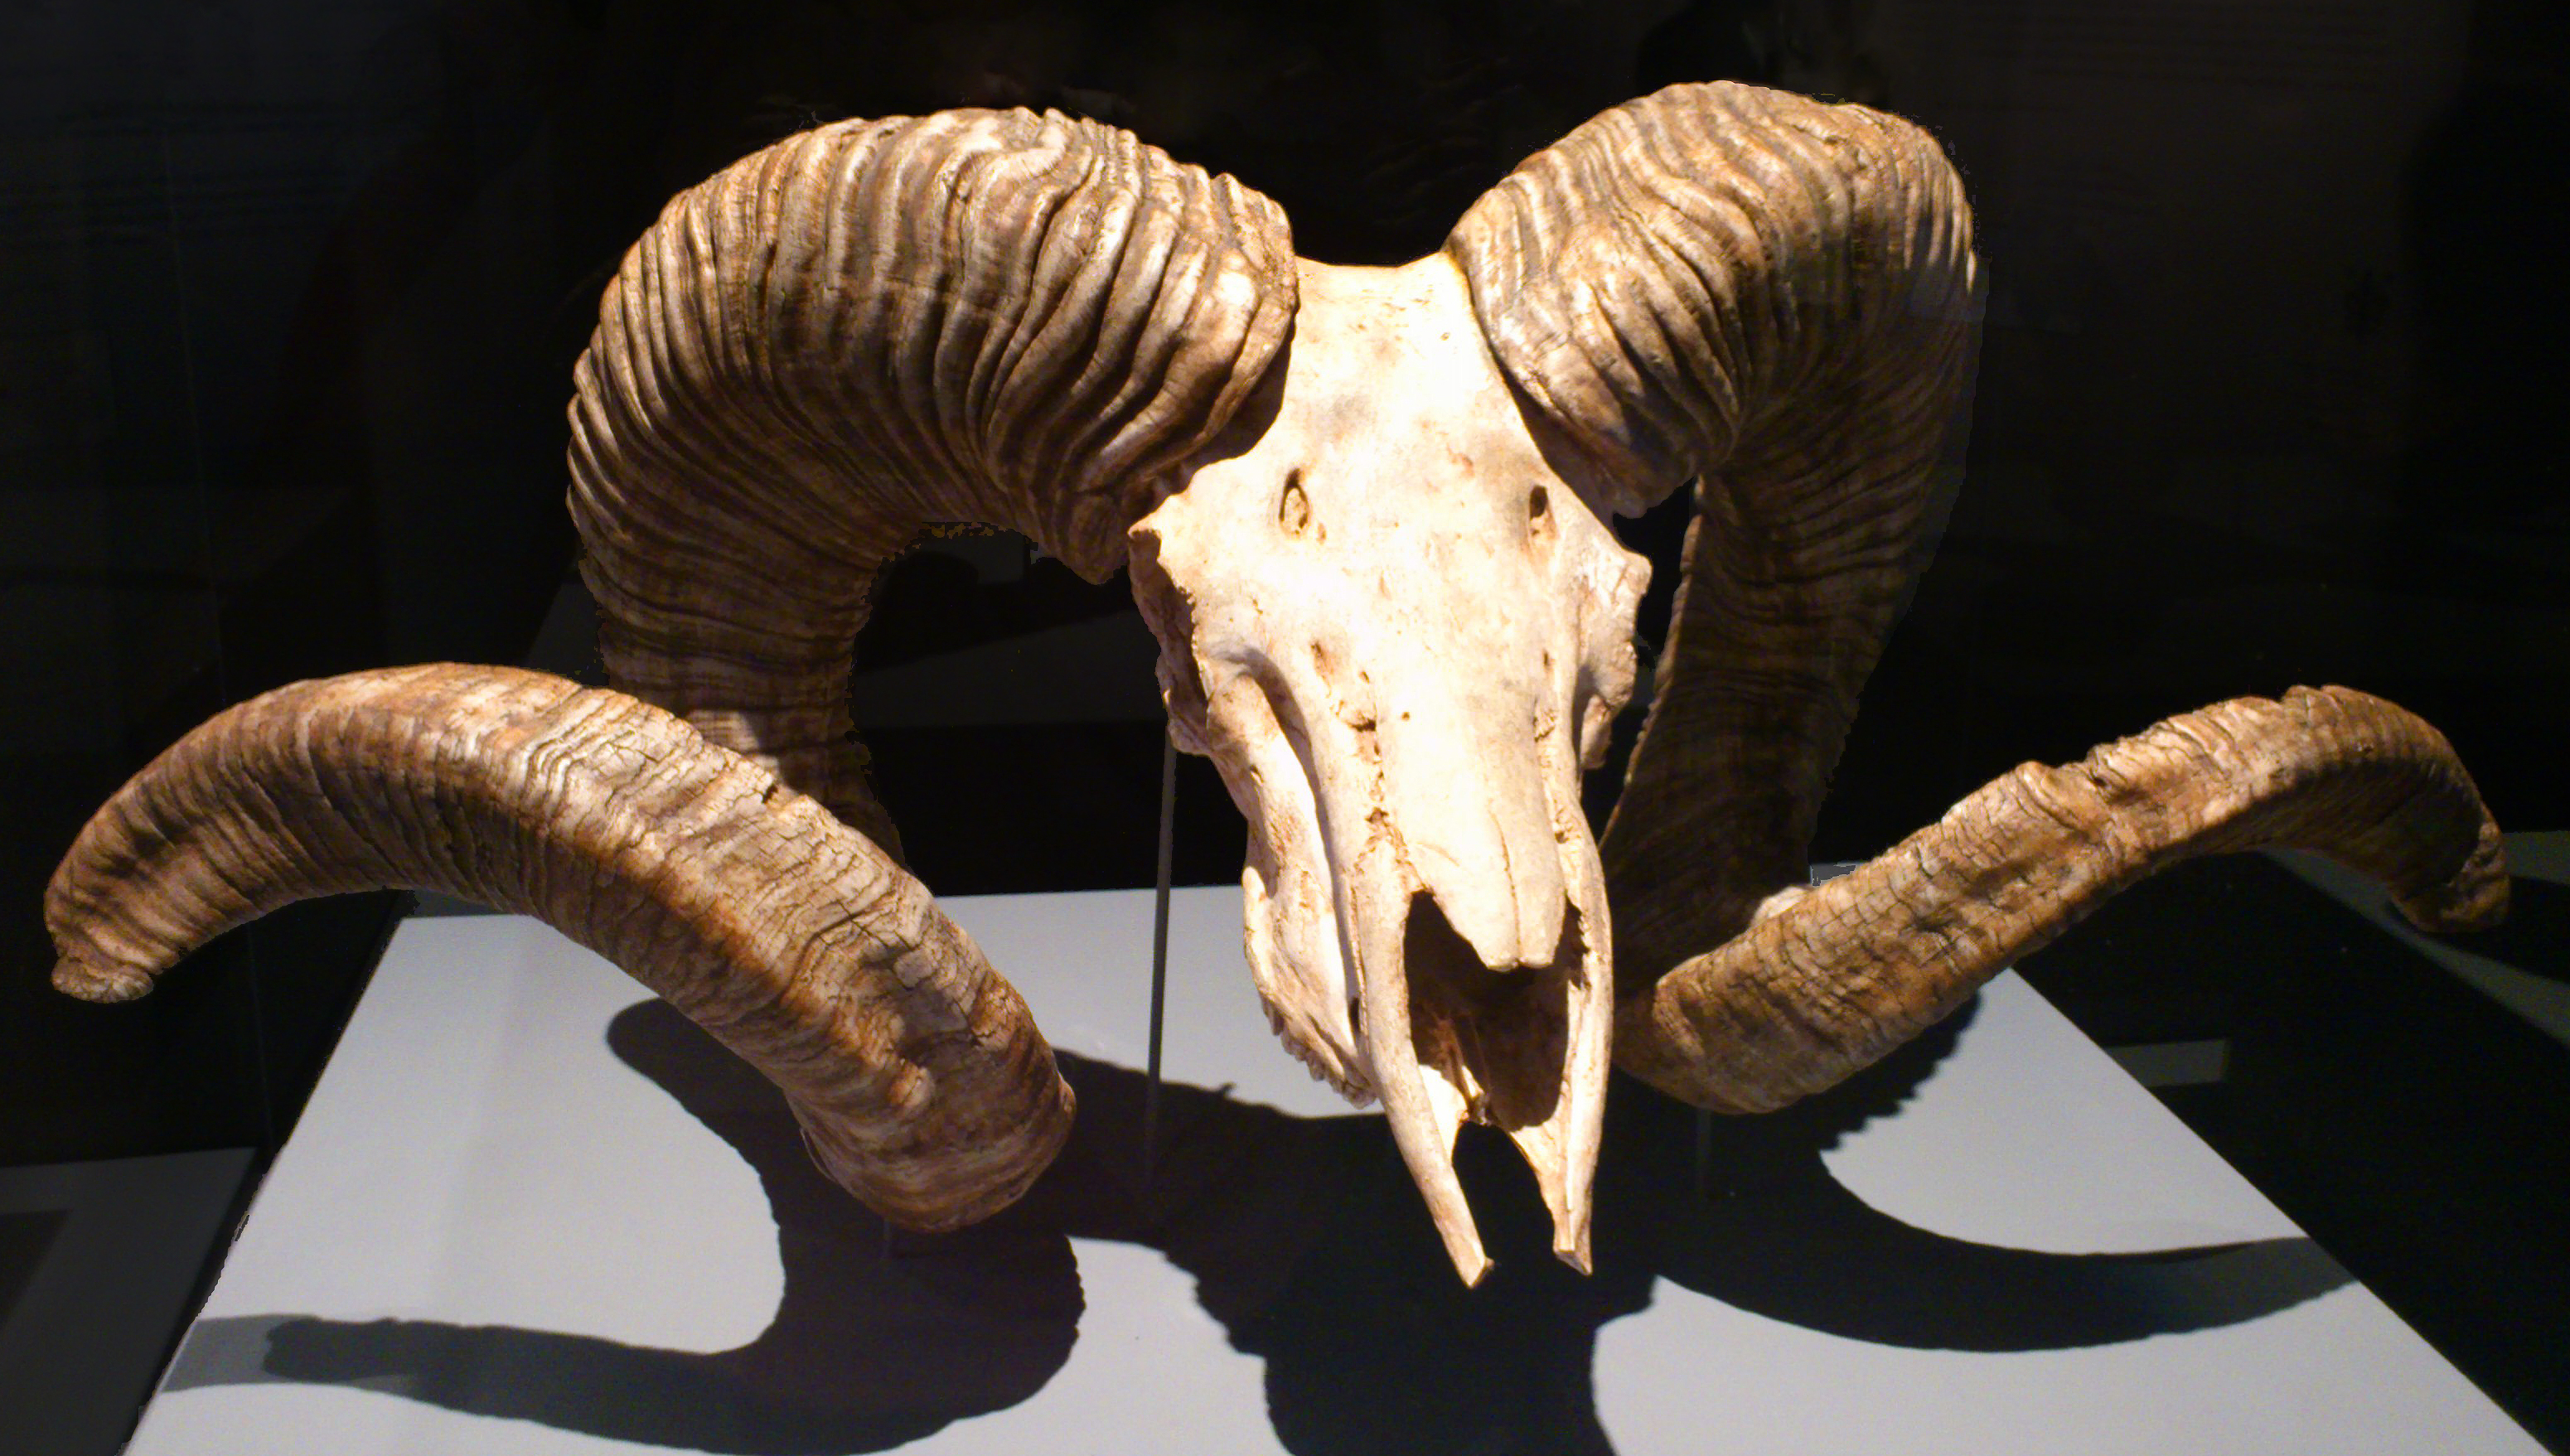  Marco Polo sheep skull